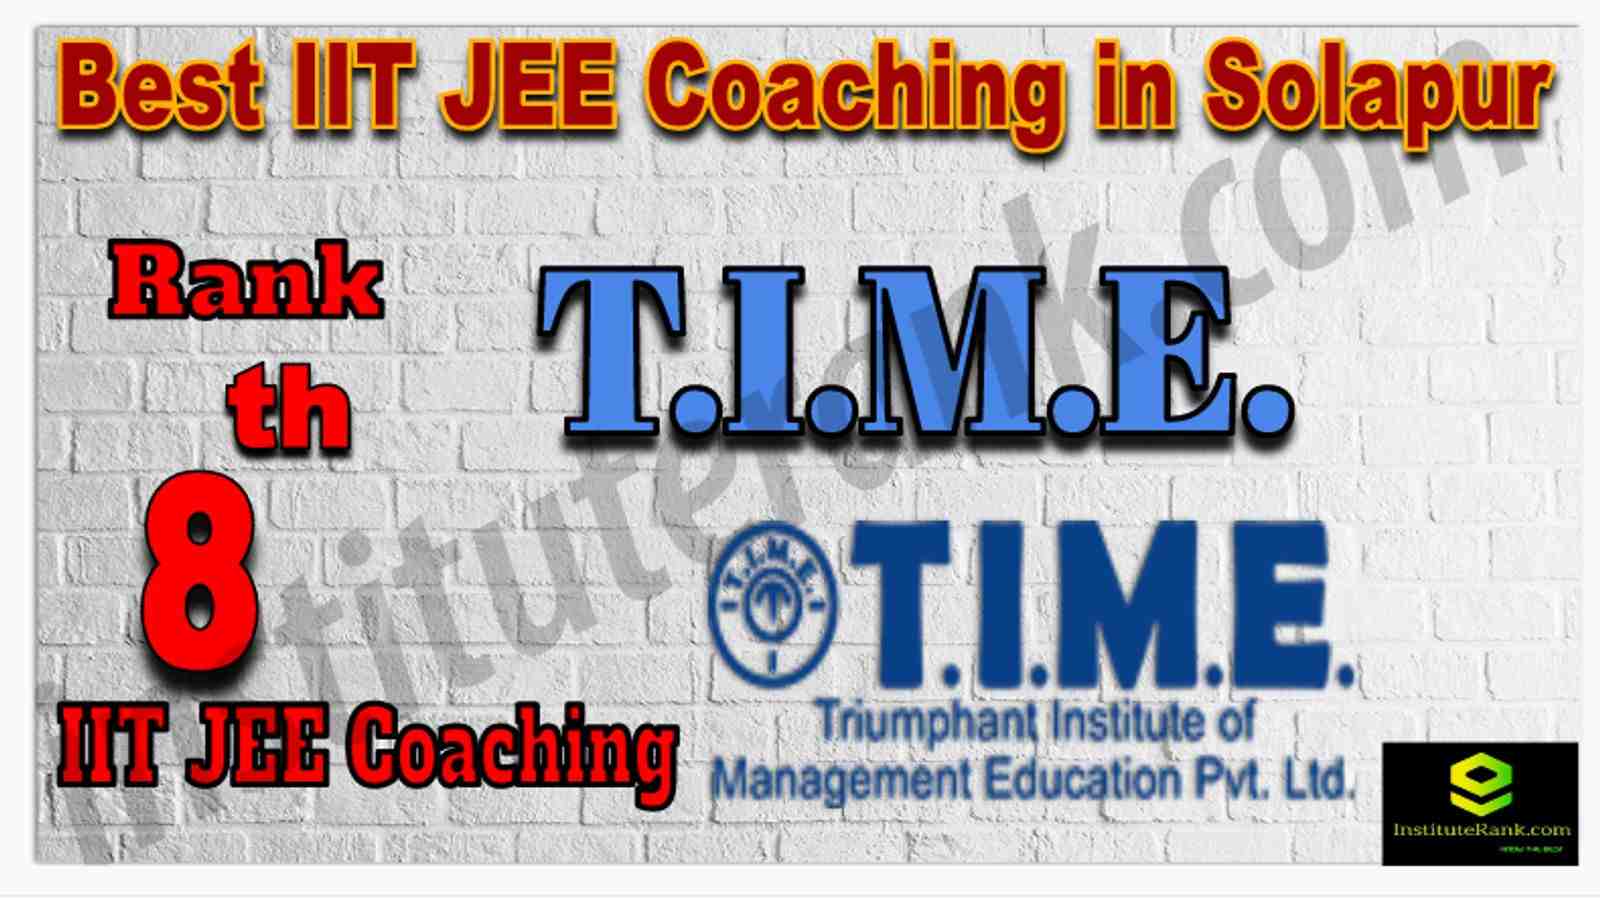 Rank 8th Best IIT JEE Coaching in Solapur